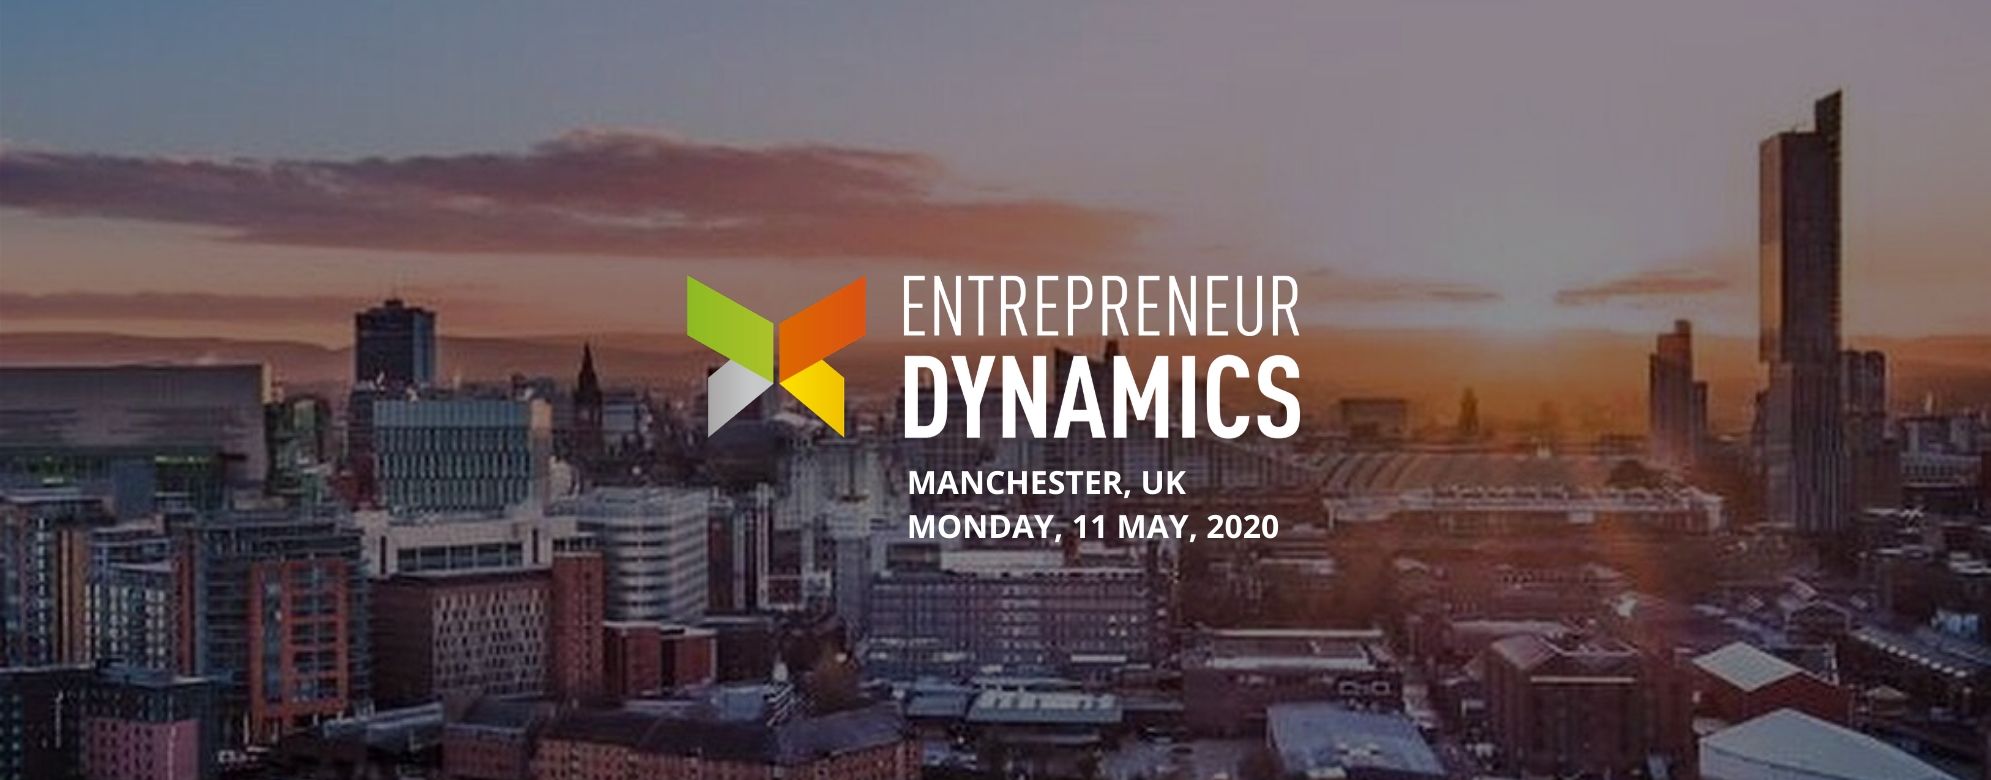 Entrepreneur Dynamics - Manchester, Manchester, England, United Kingdom